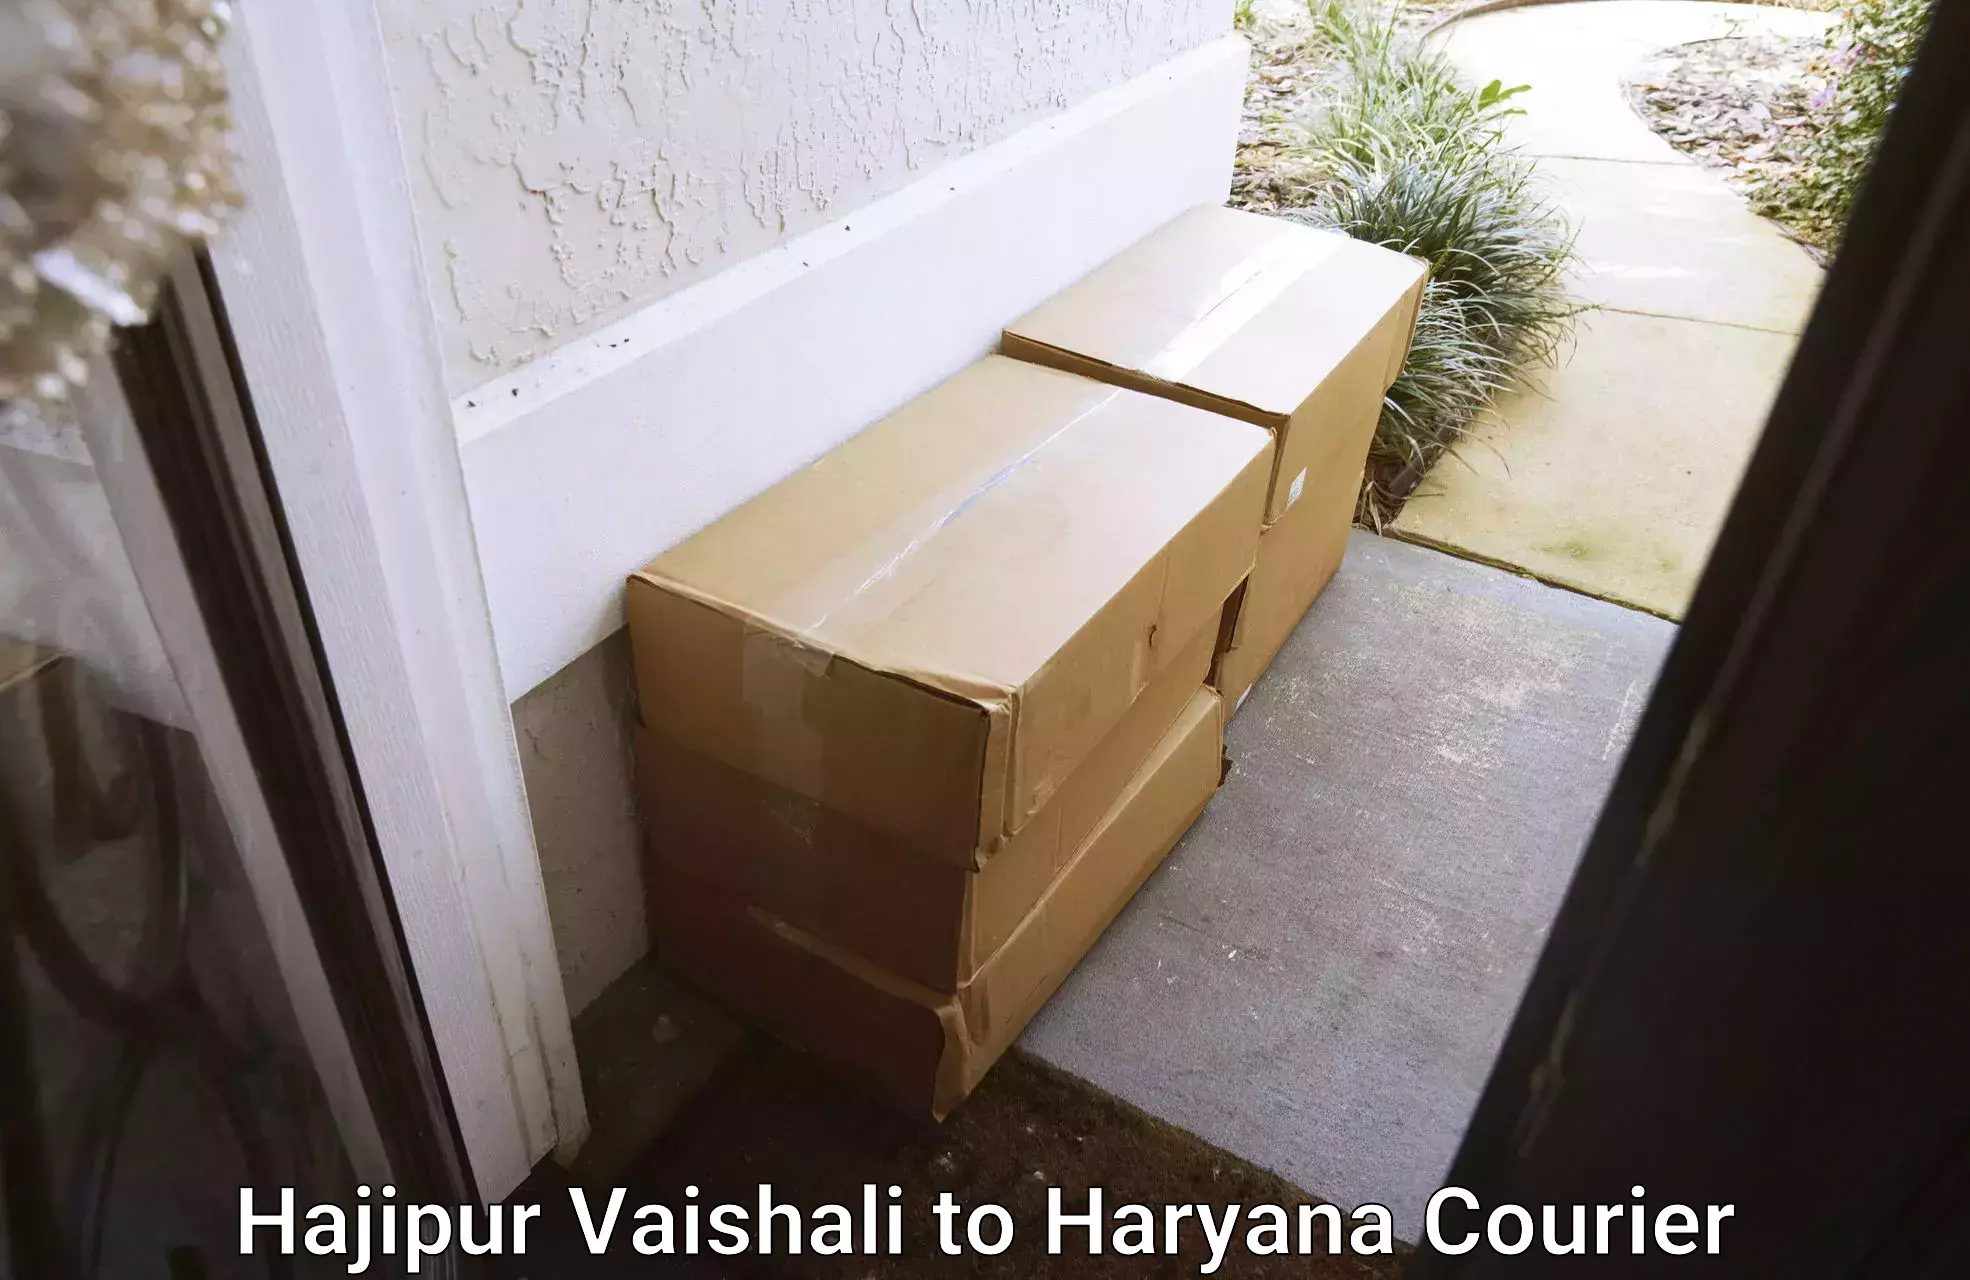 Professional moving company Hajipur Vaishali to Mandi Dabwali